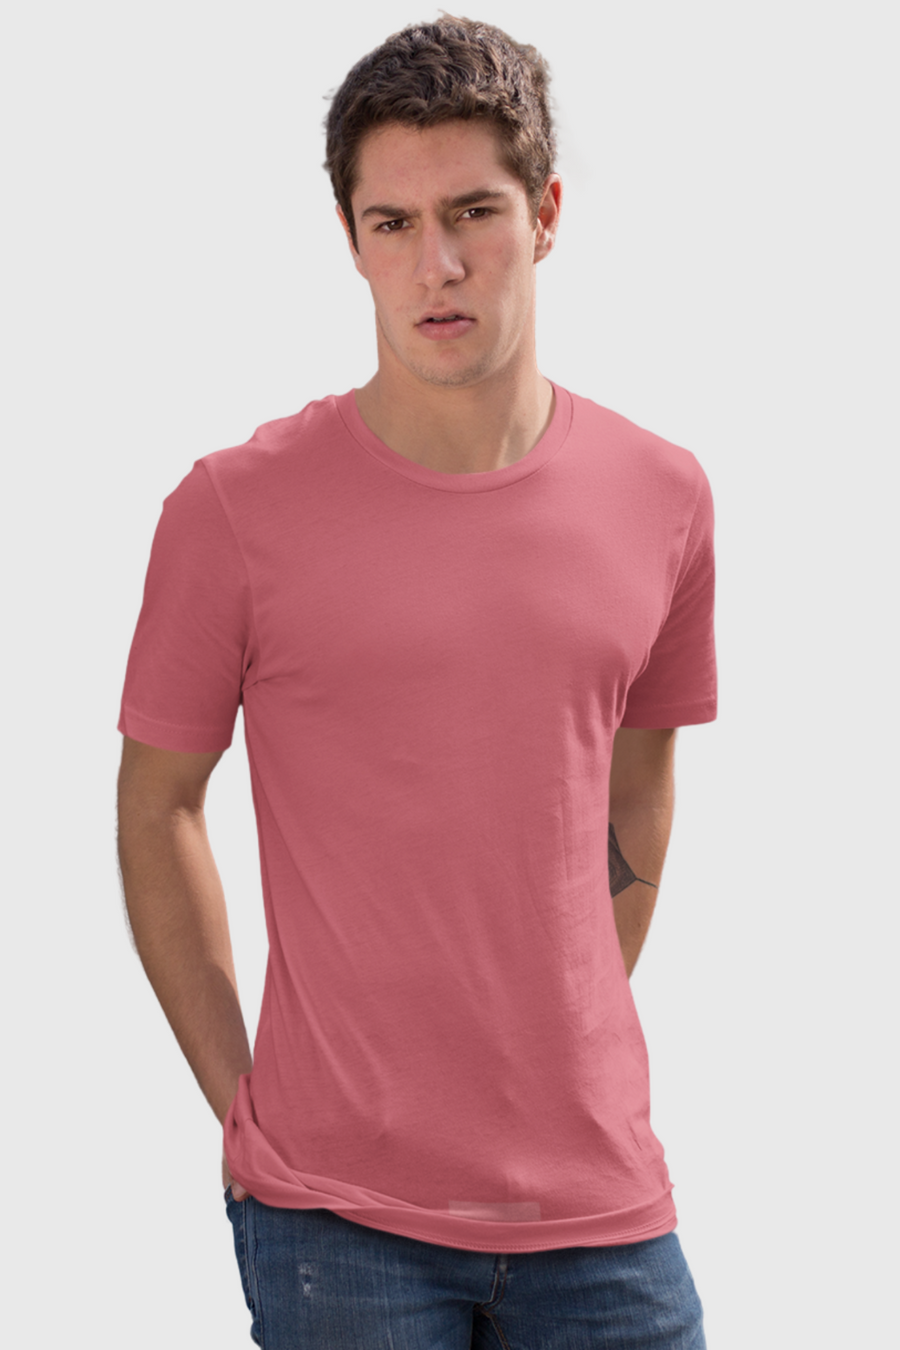 Baby Pink - Short sleeve t-shirt